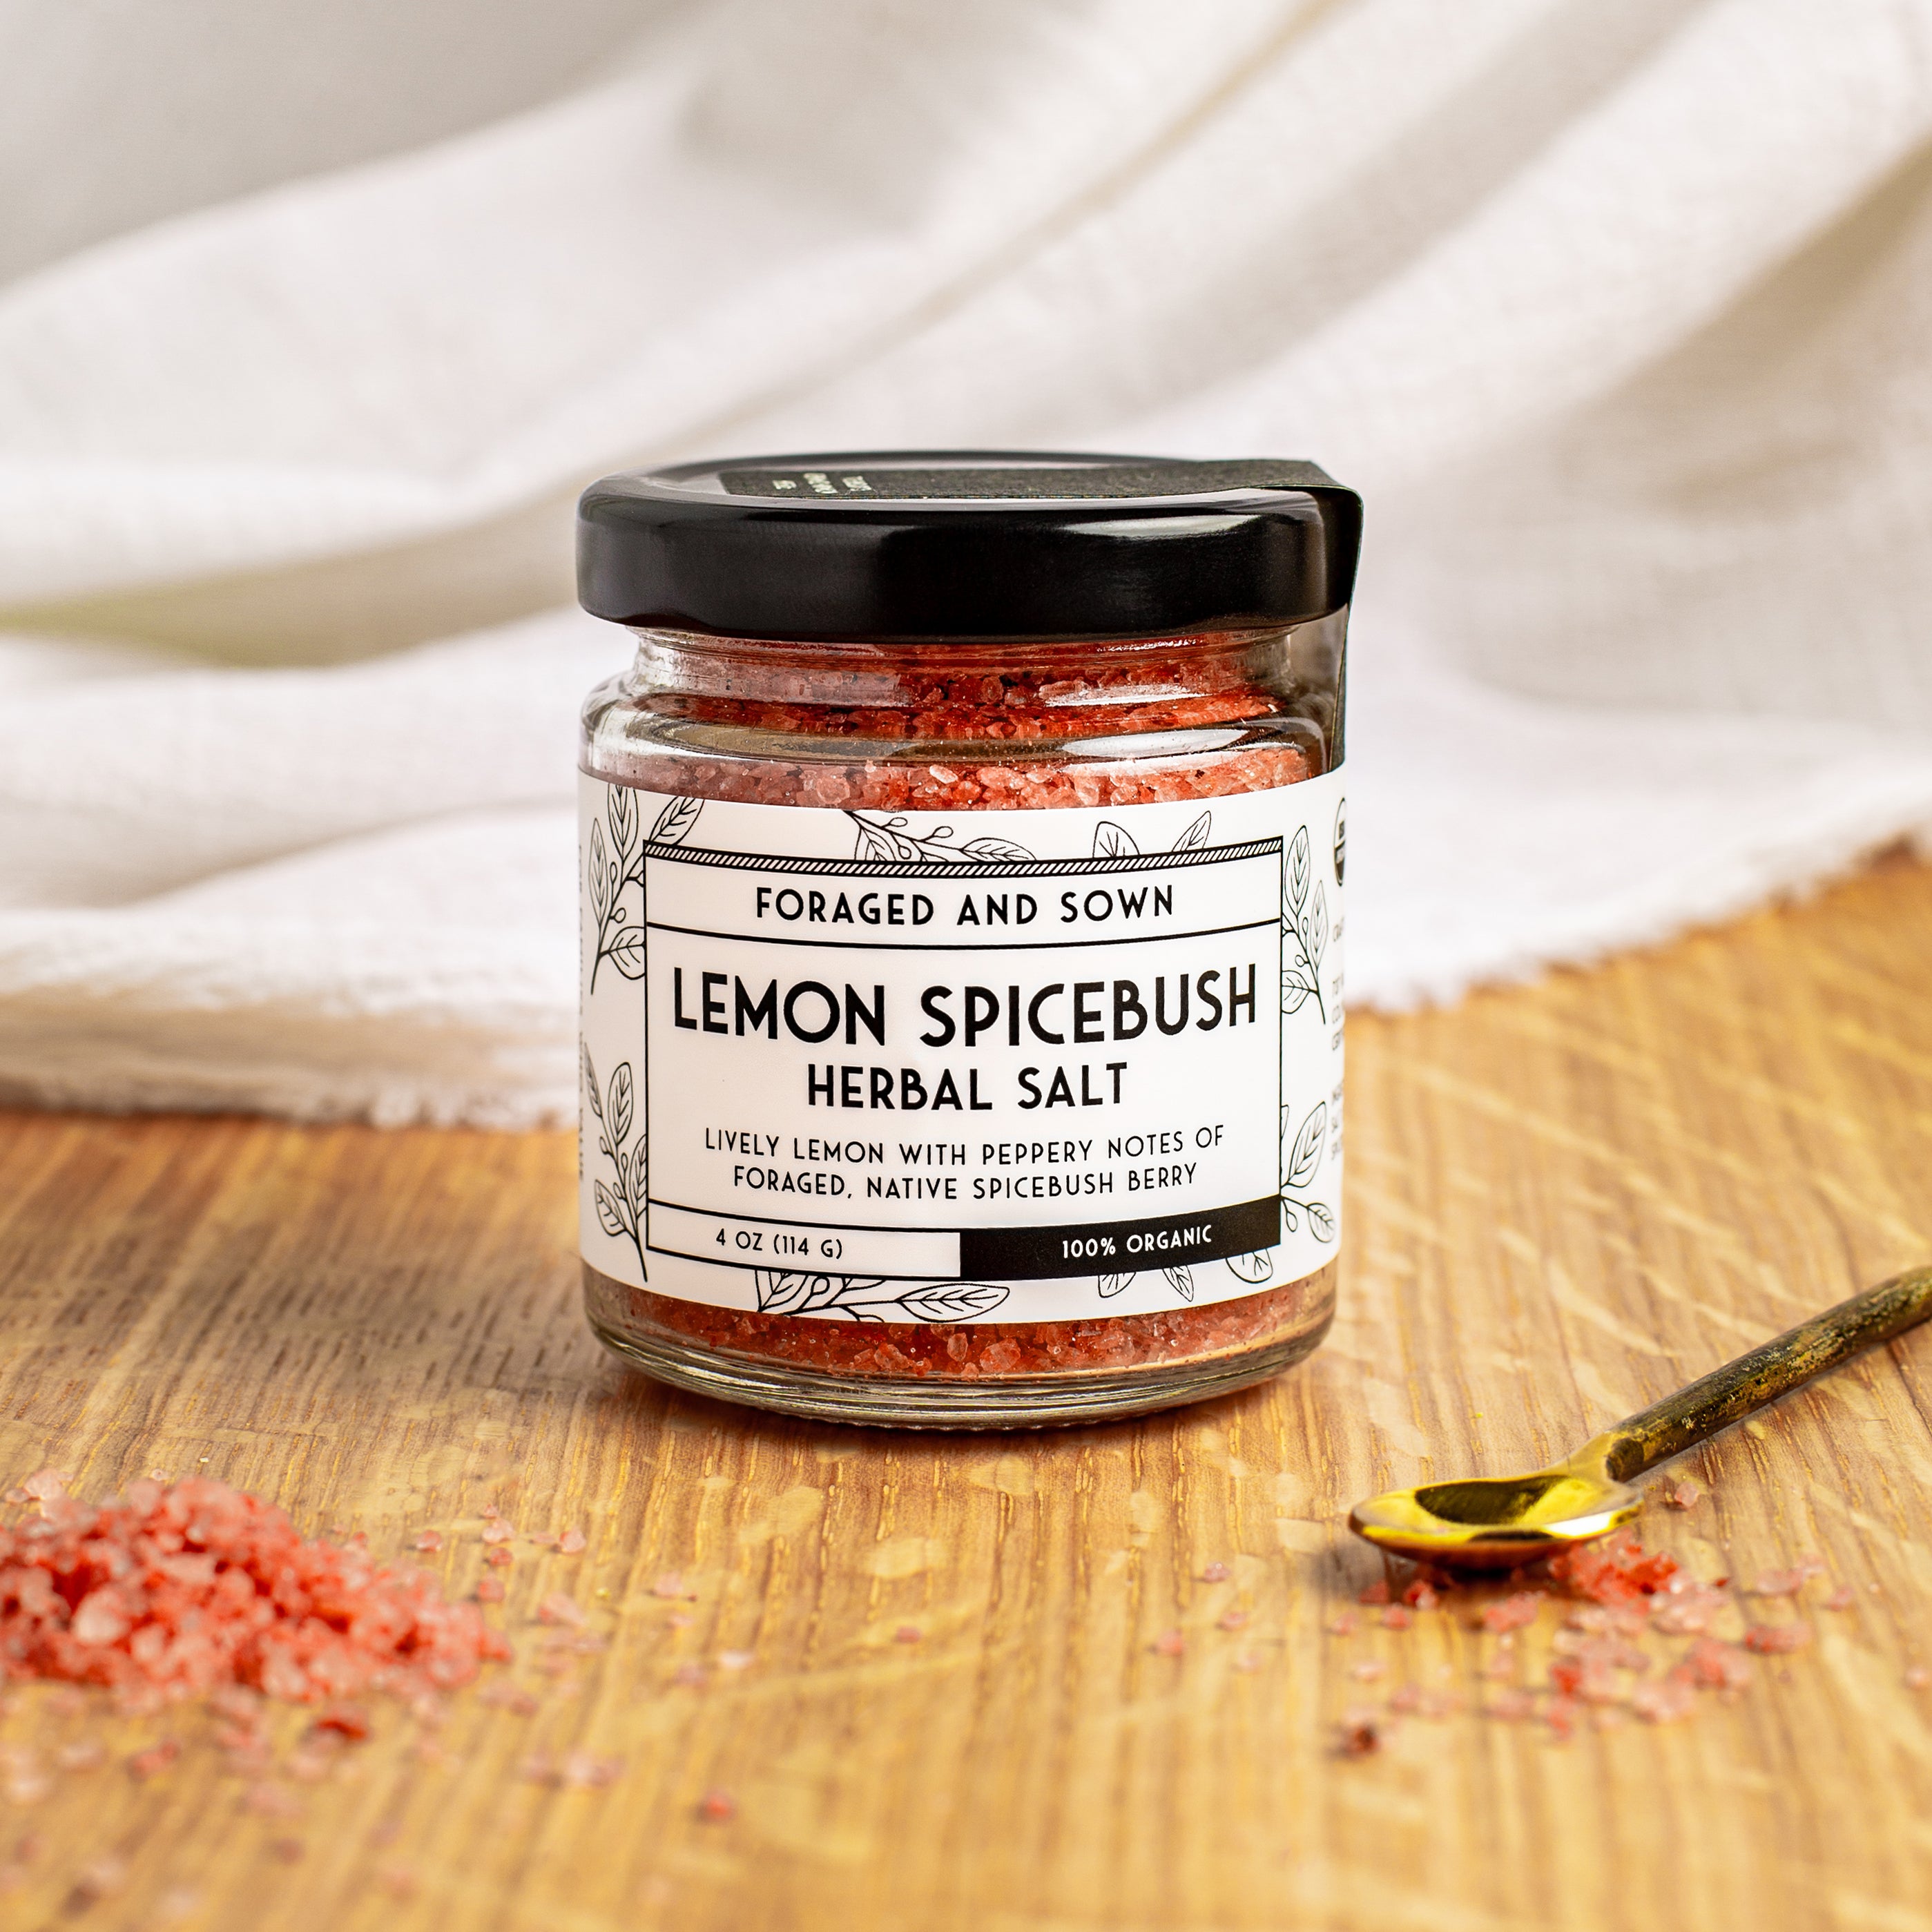 Lemon Spicebush Herbal Salt